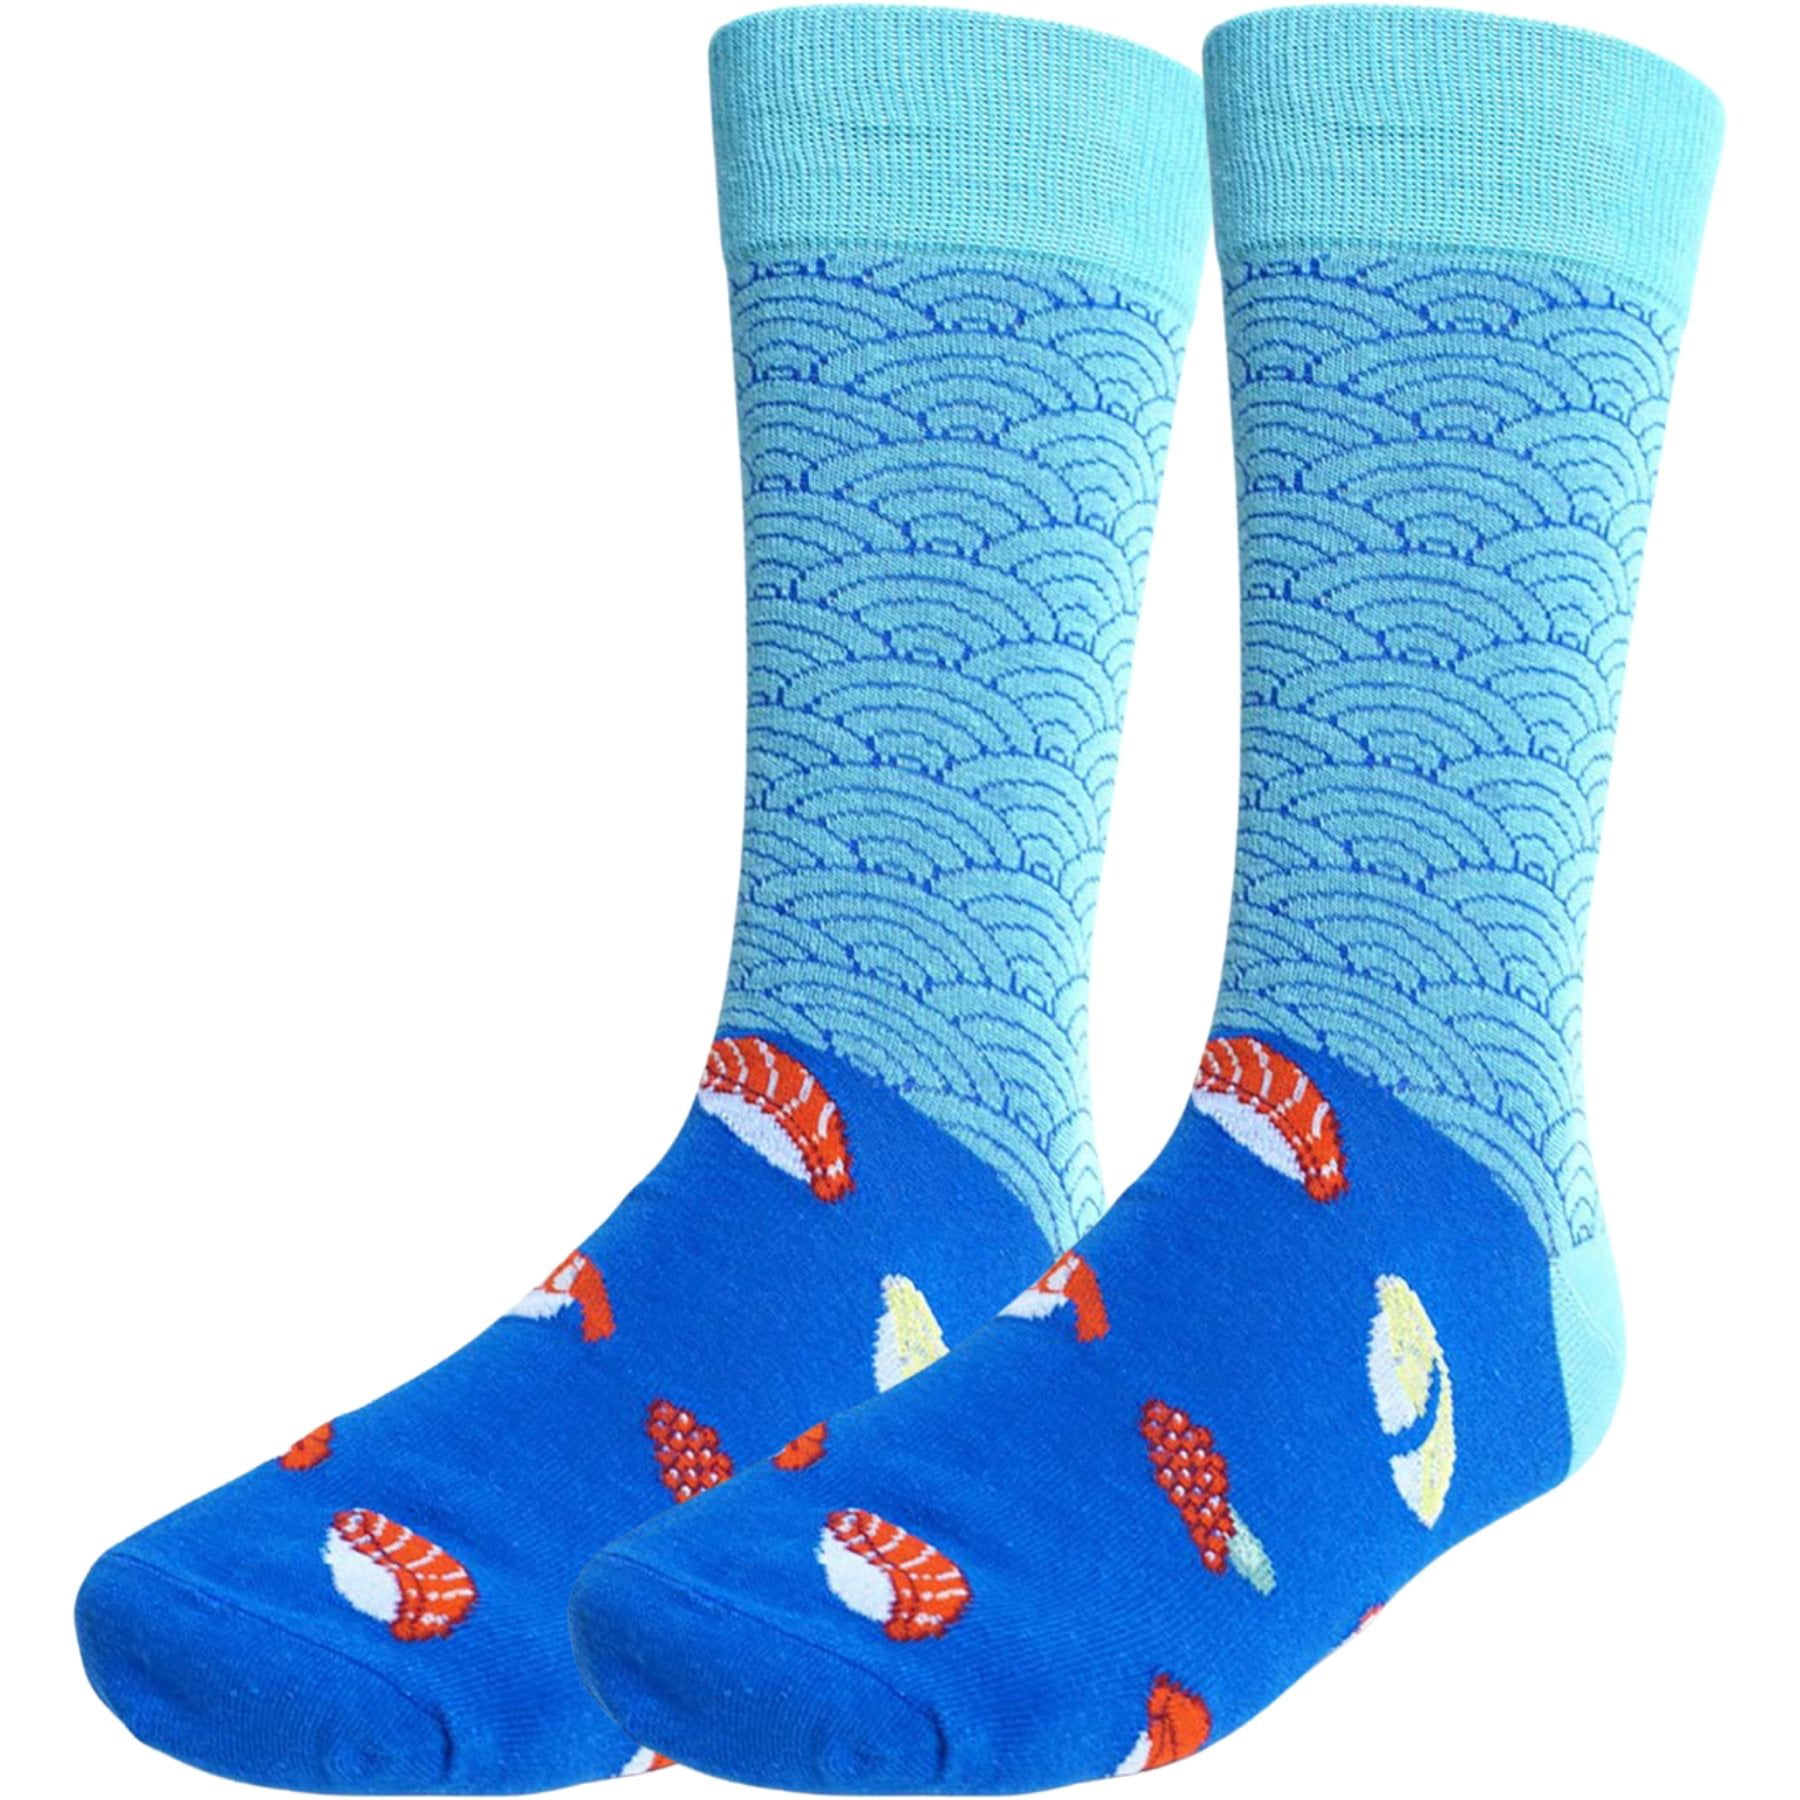 Cute Socks  Adorable Fun Socks With Animals, Happy Food & More - Cute But  Crazy Socks